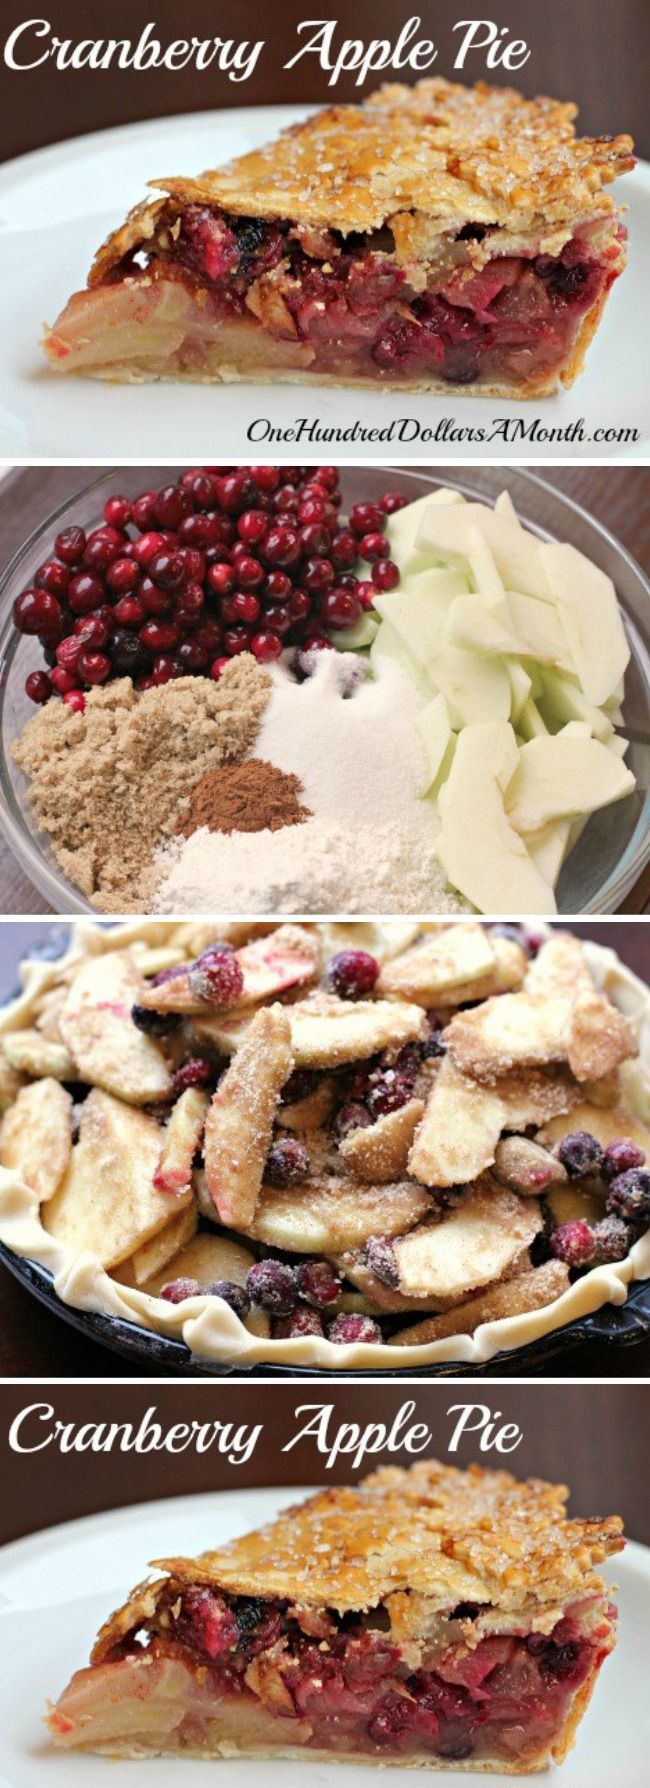 Thanksgiving Dessert Recipes - Cranberry Apple Pie - One Hundred Dollars a Month -   19 thanksgiving desserts pie apple ideas